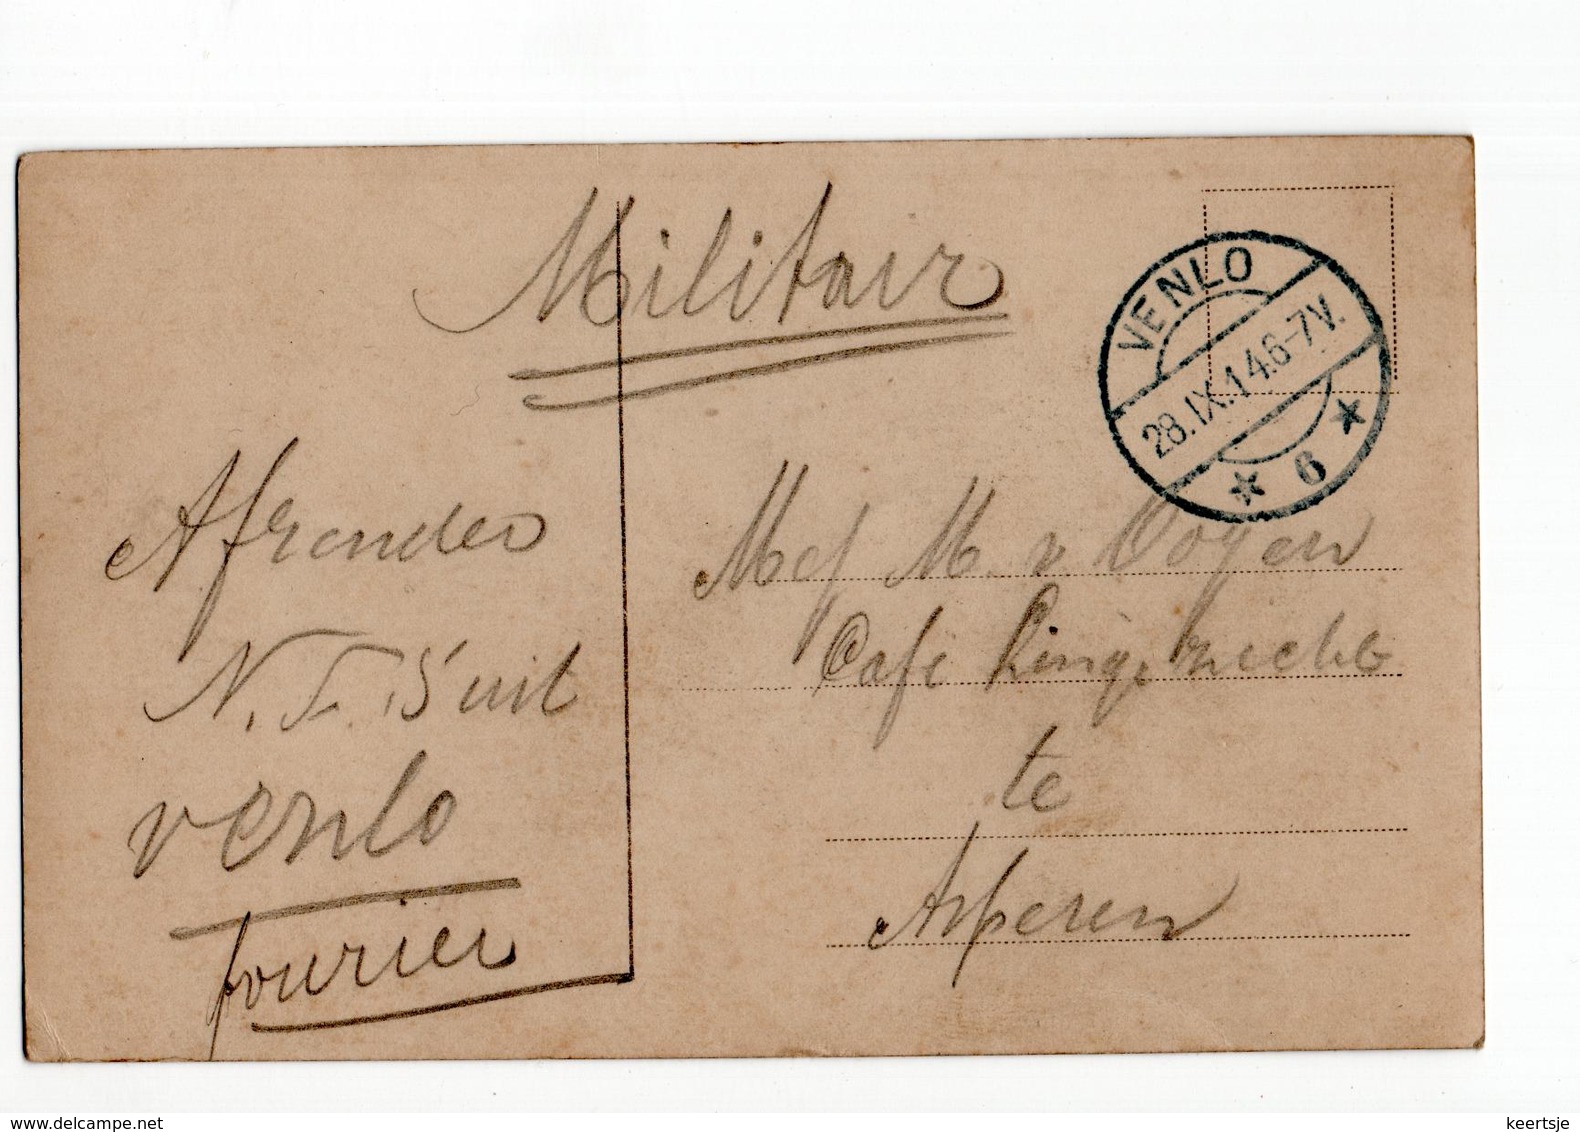 Venlo Langebalk 6 - 1914 - Postal History